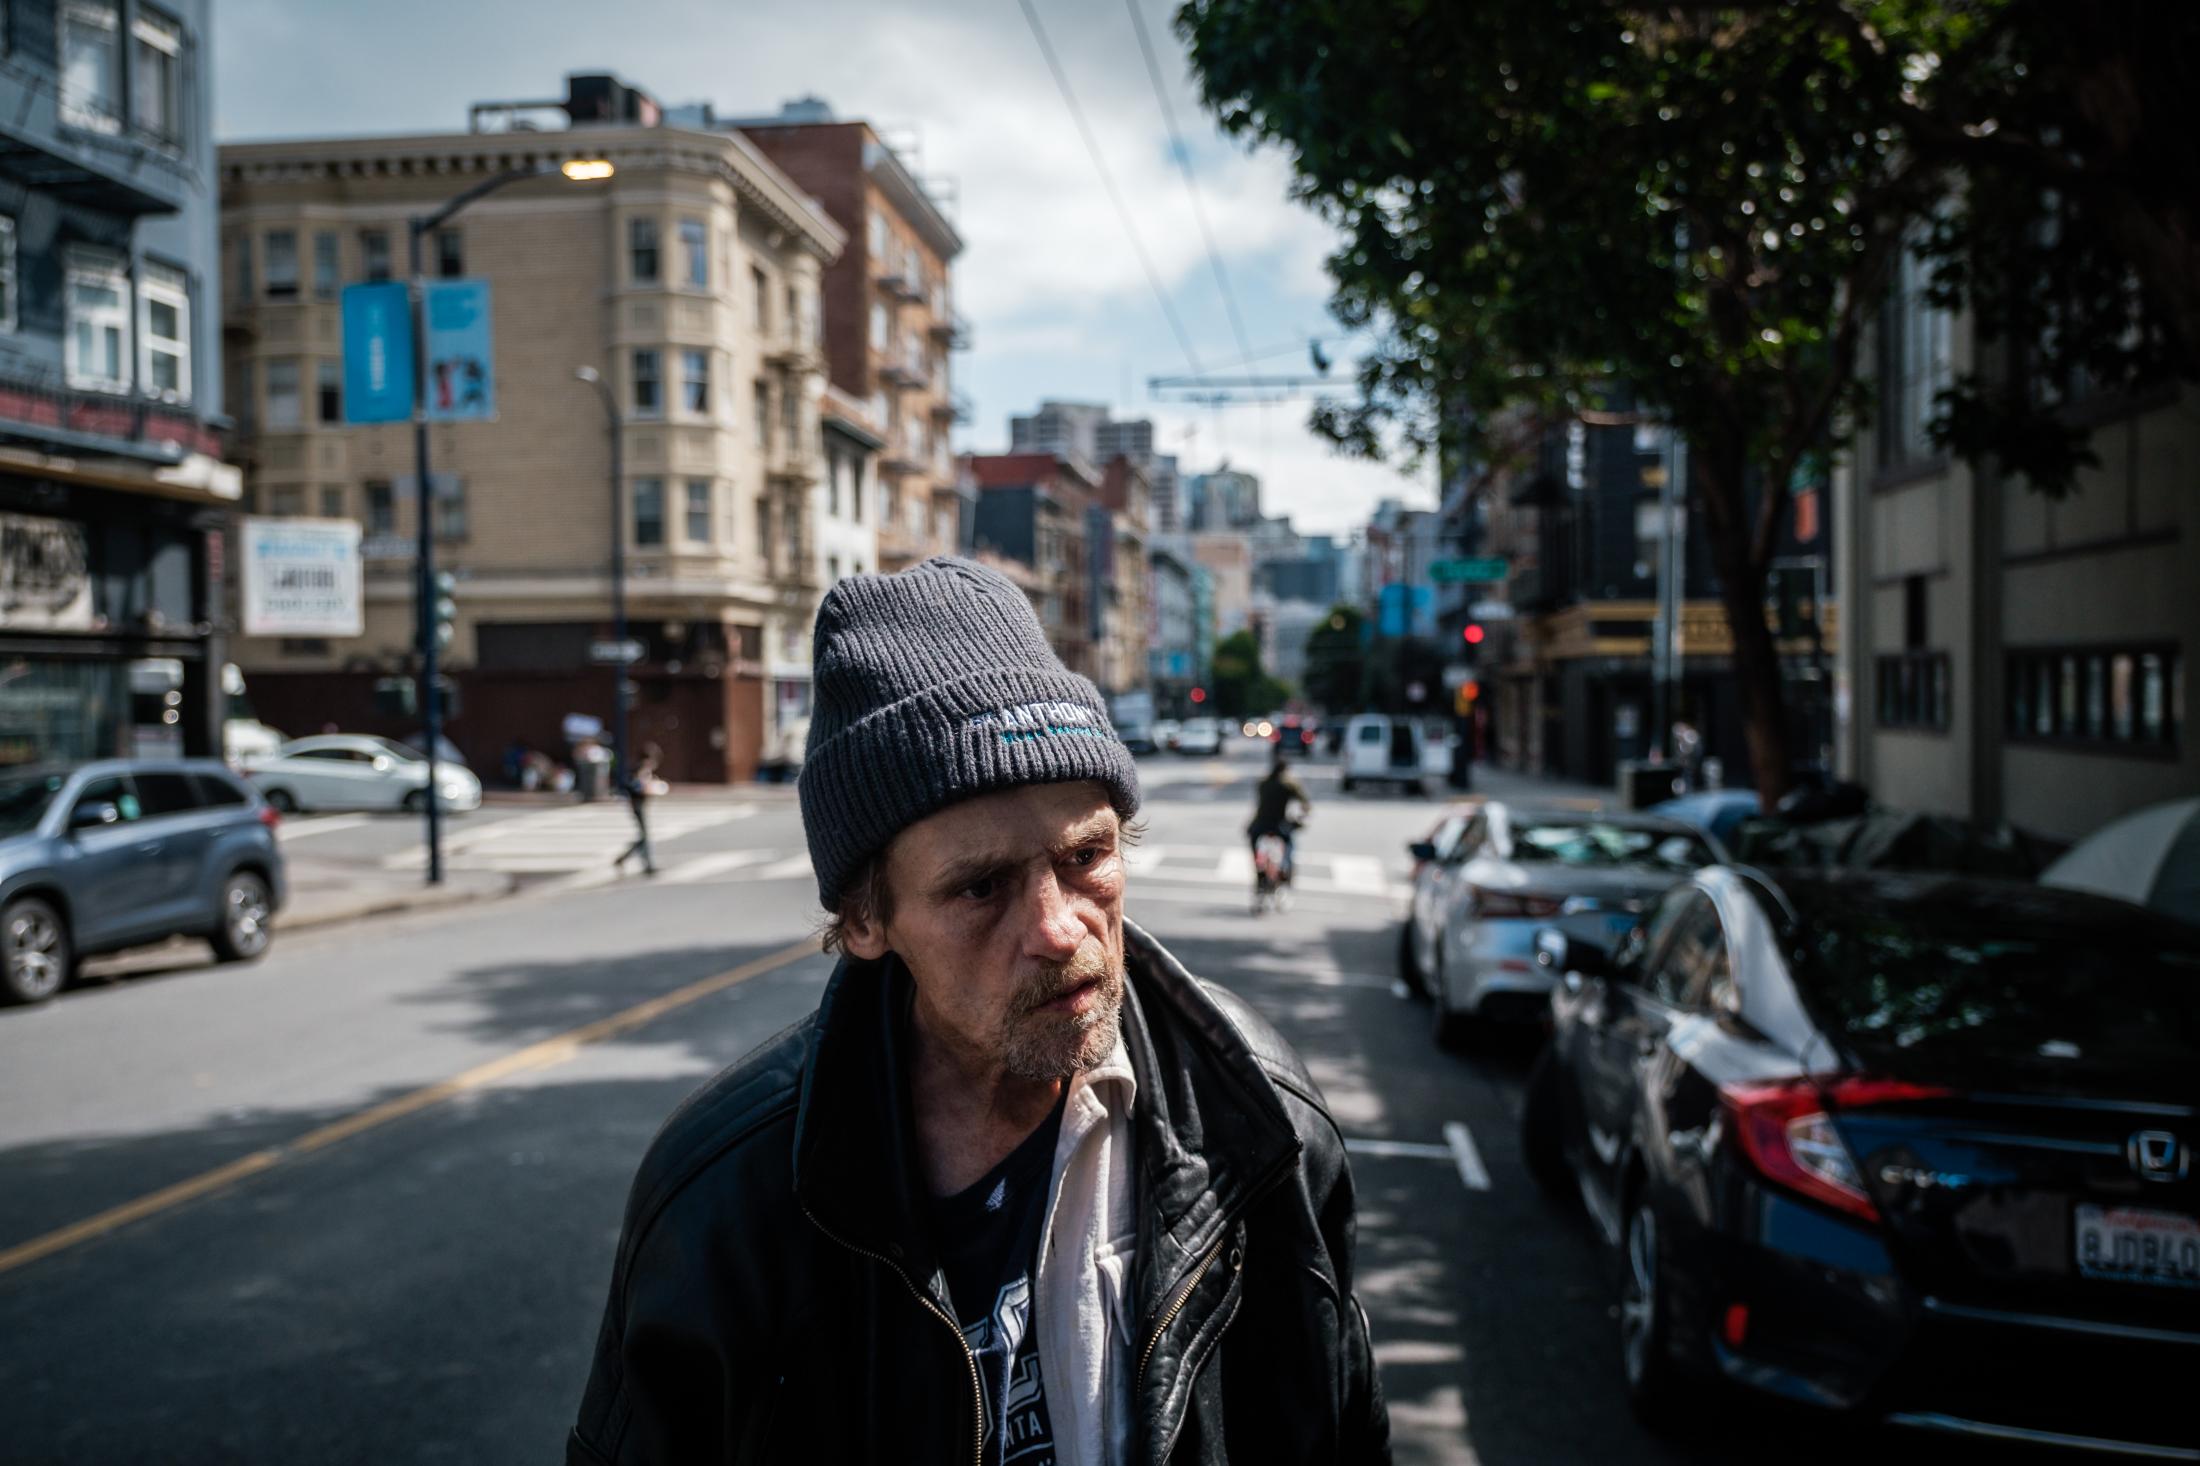 San Francisco's Housing Crisis